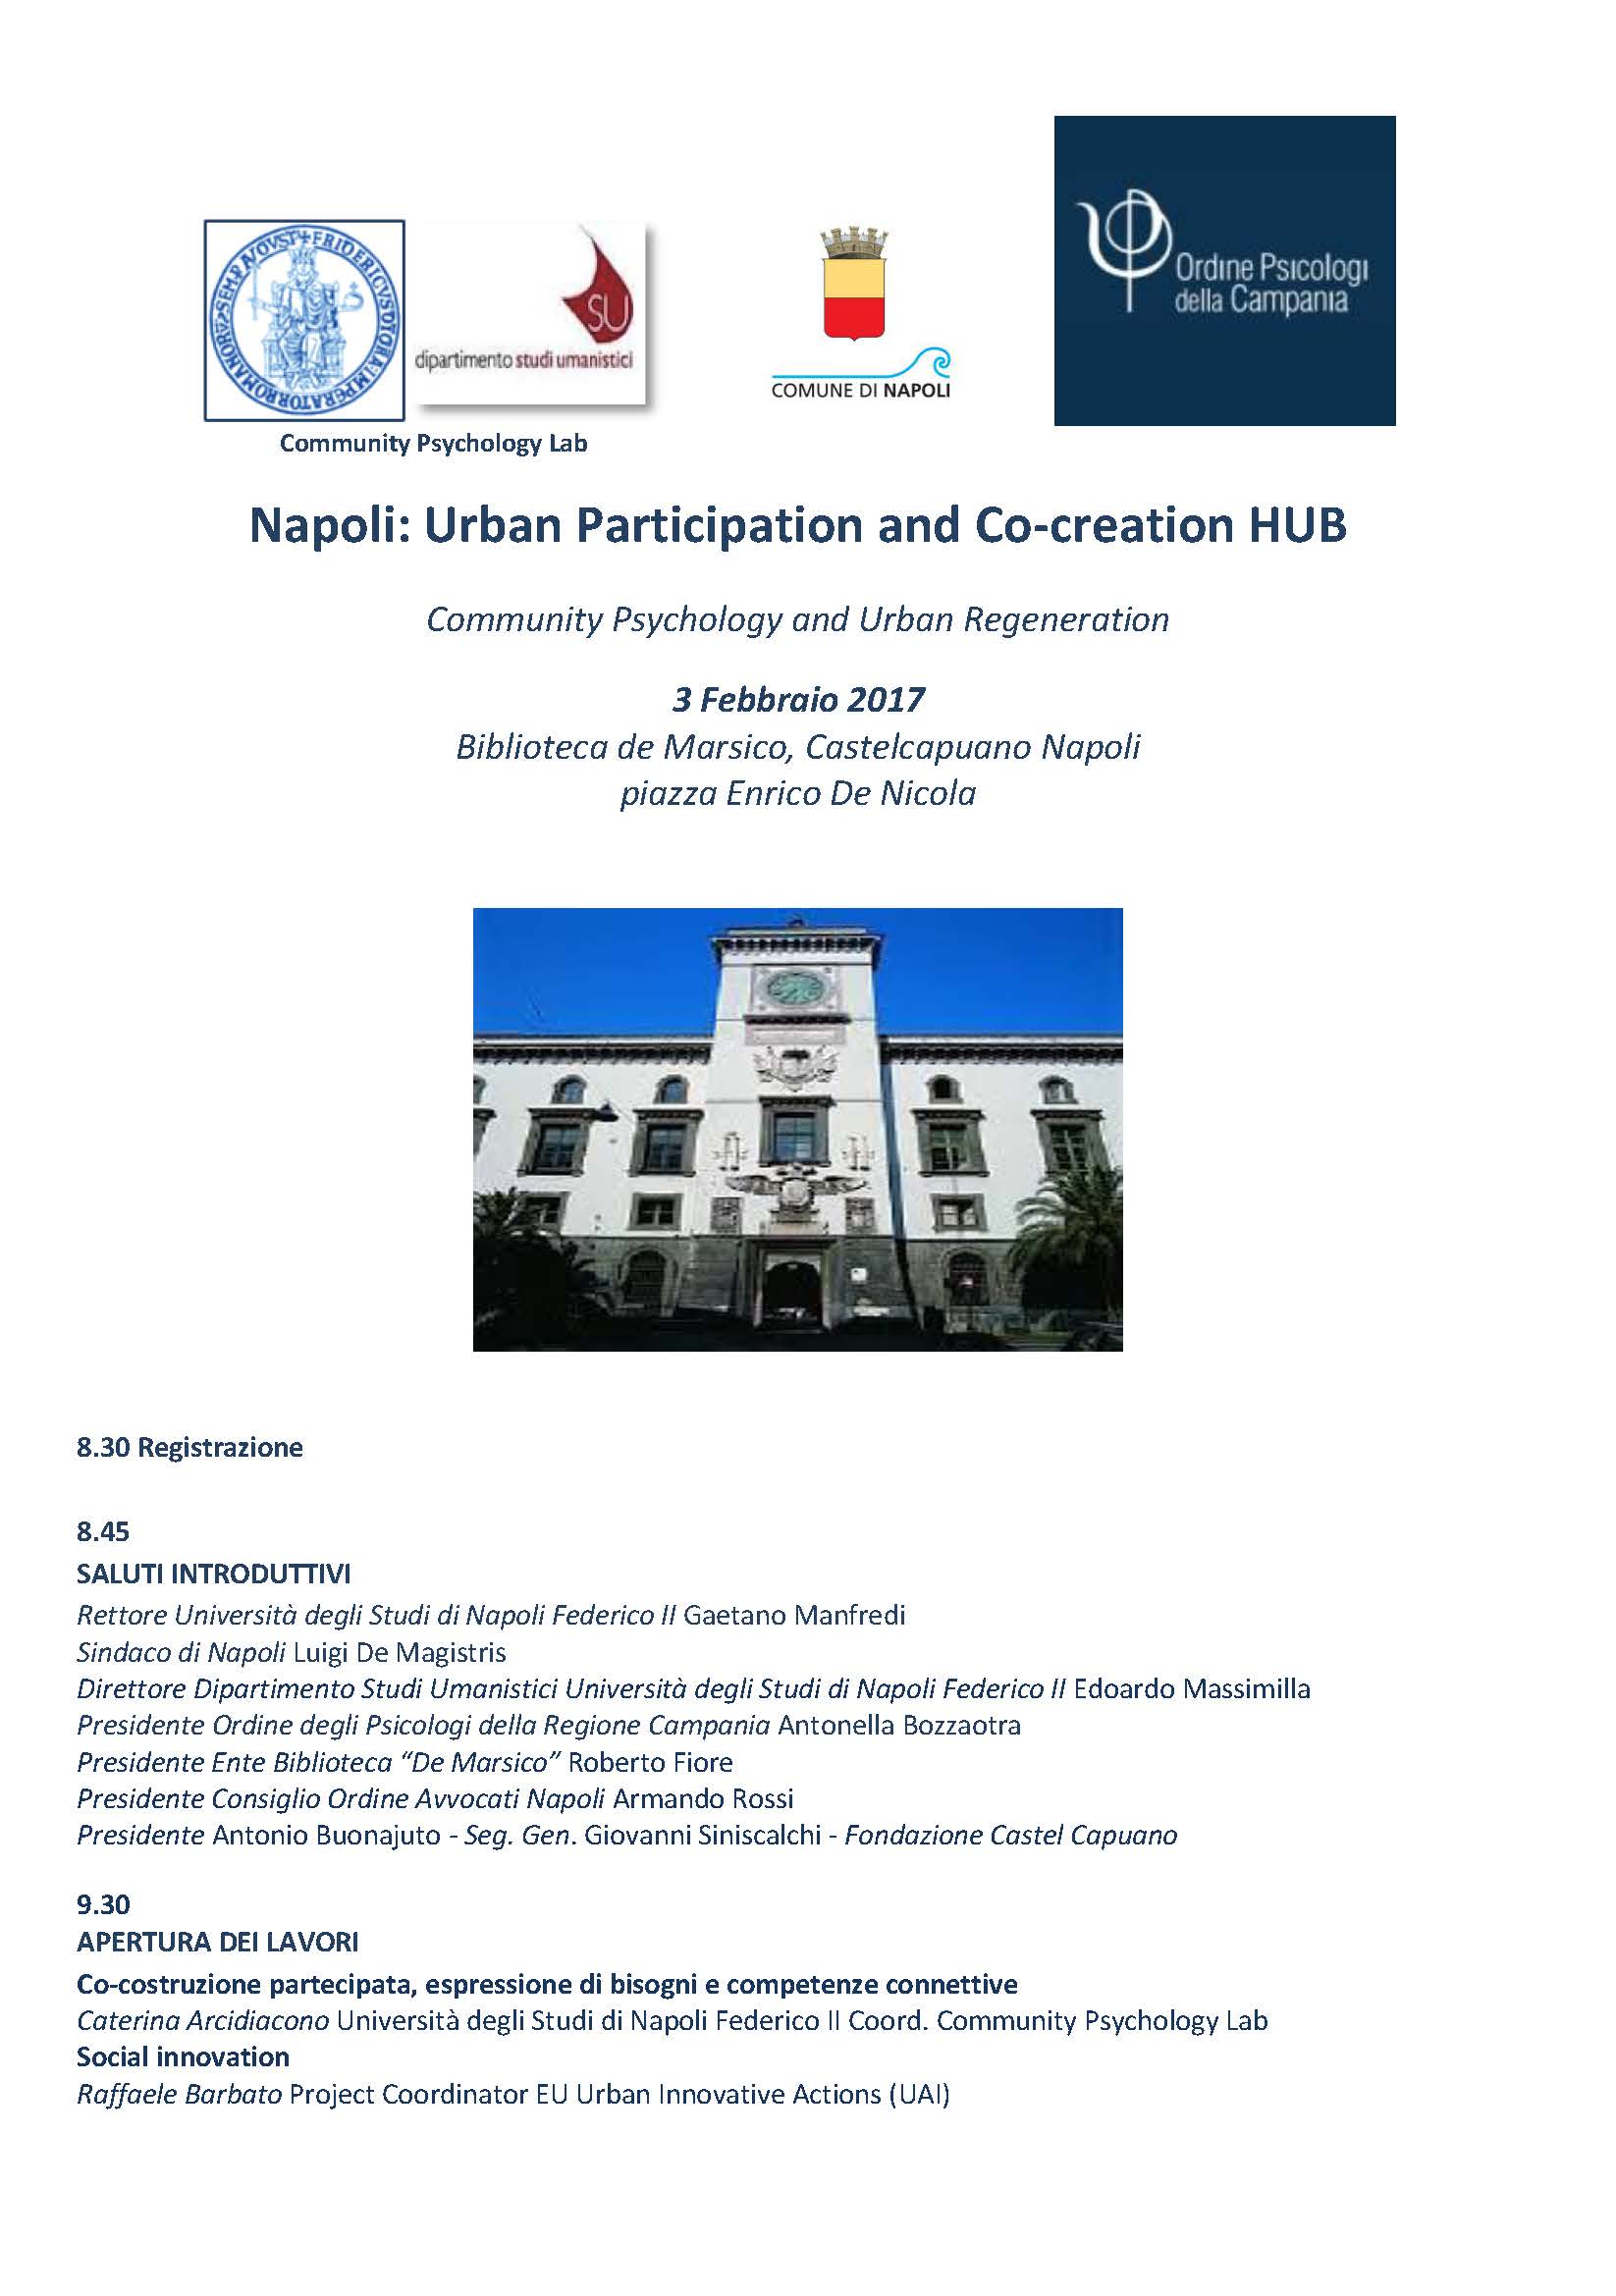 Urban Participation and Co-Creation Hub - 3 febbraio 2017 a Napoli